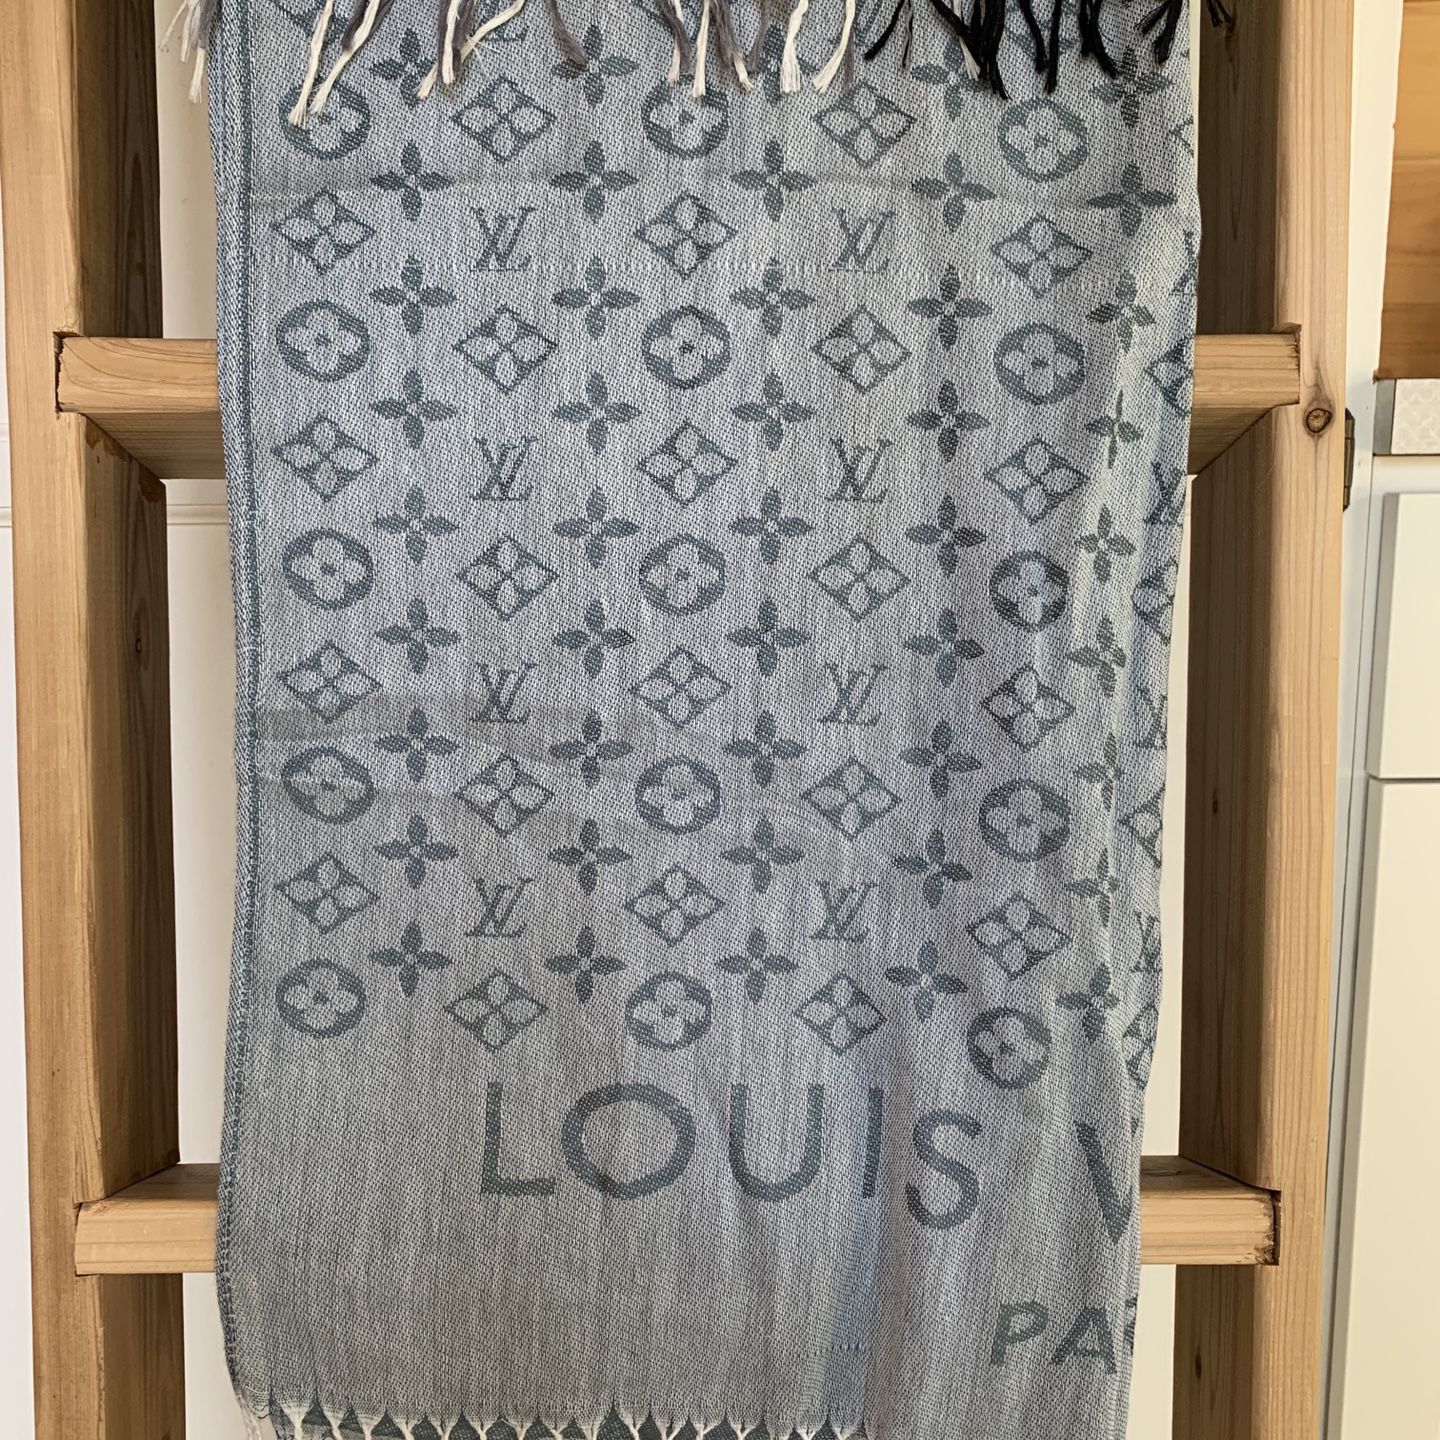 Denim Monogram Shawl  Lv scarf, Louis vuitton scarf, Casual fashion